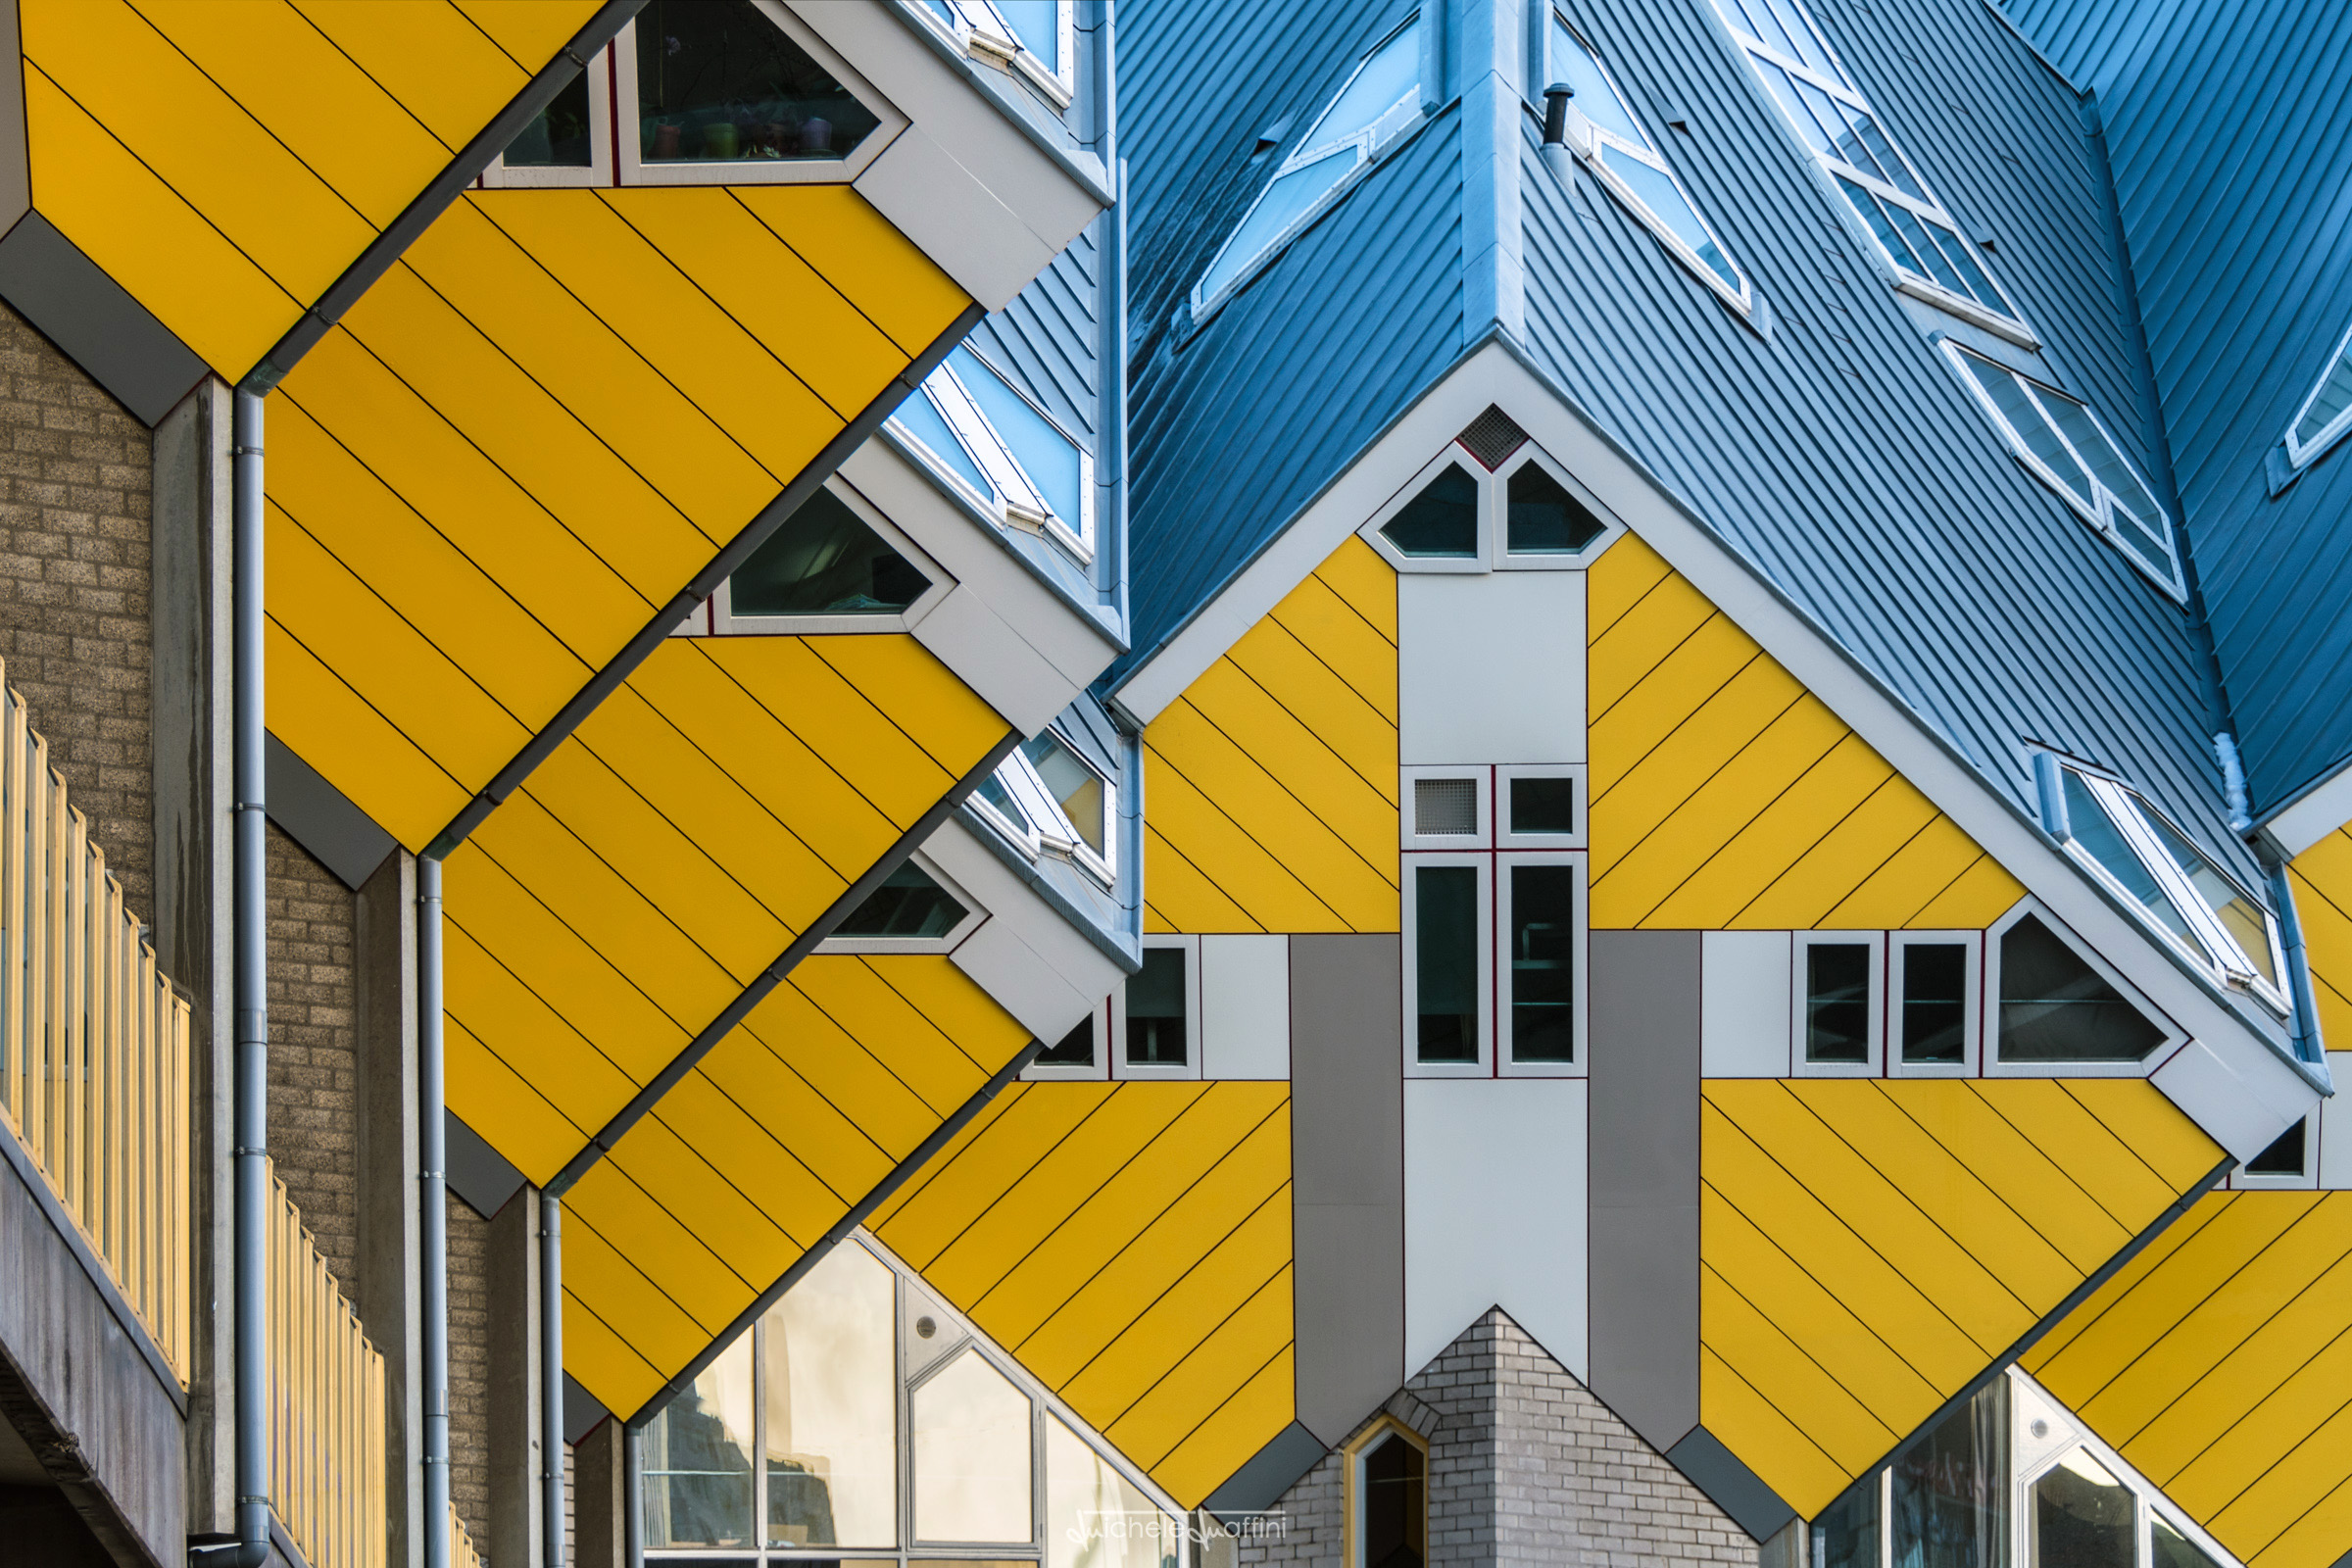 Rotterdam - Cubic houses of Piet Blom...